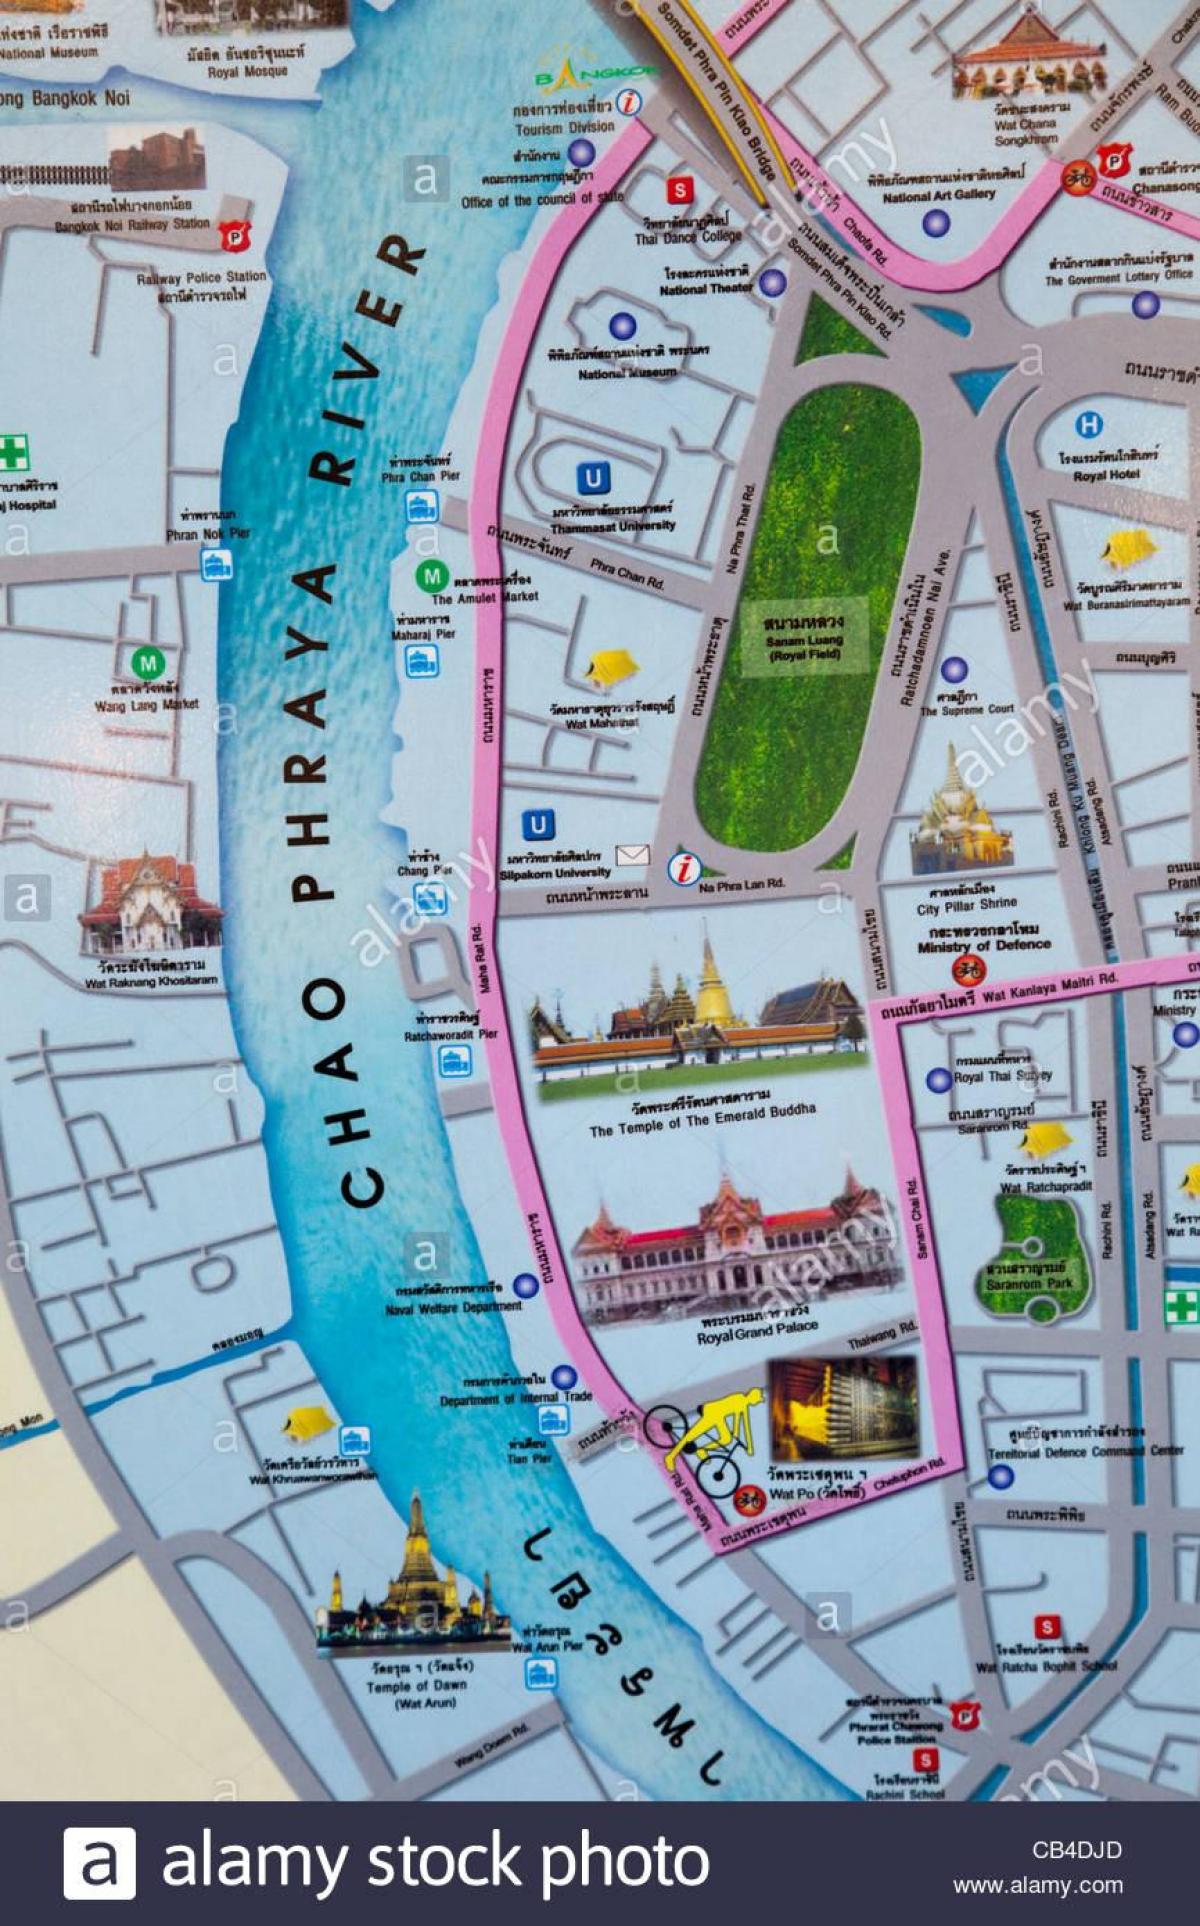 bangkok mapa turismo-lekuak